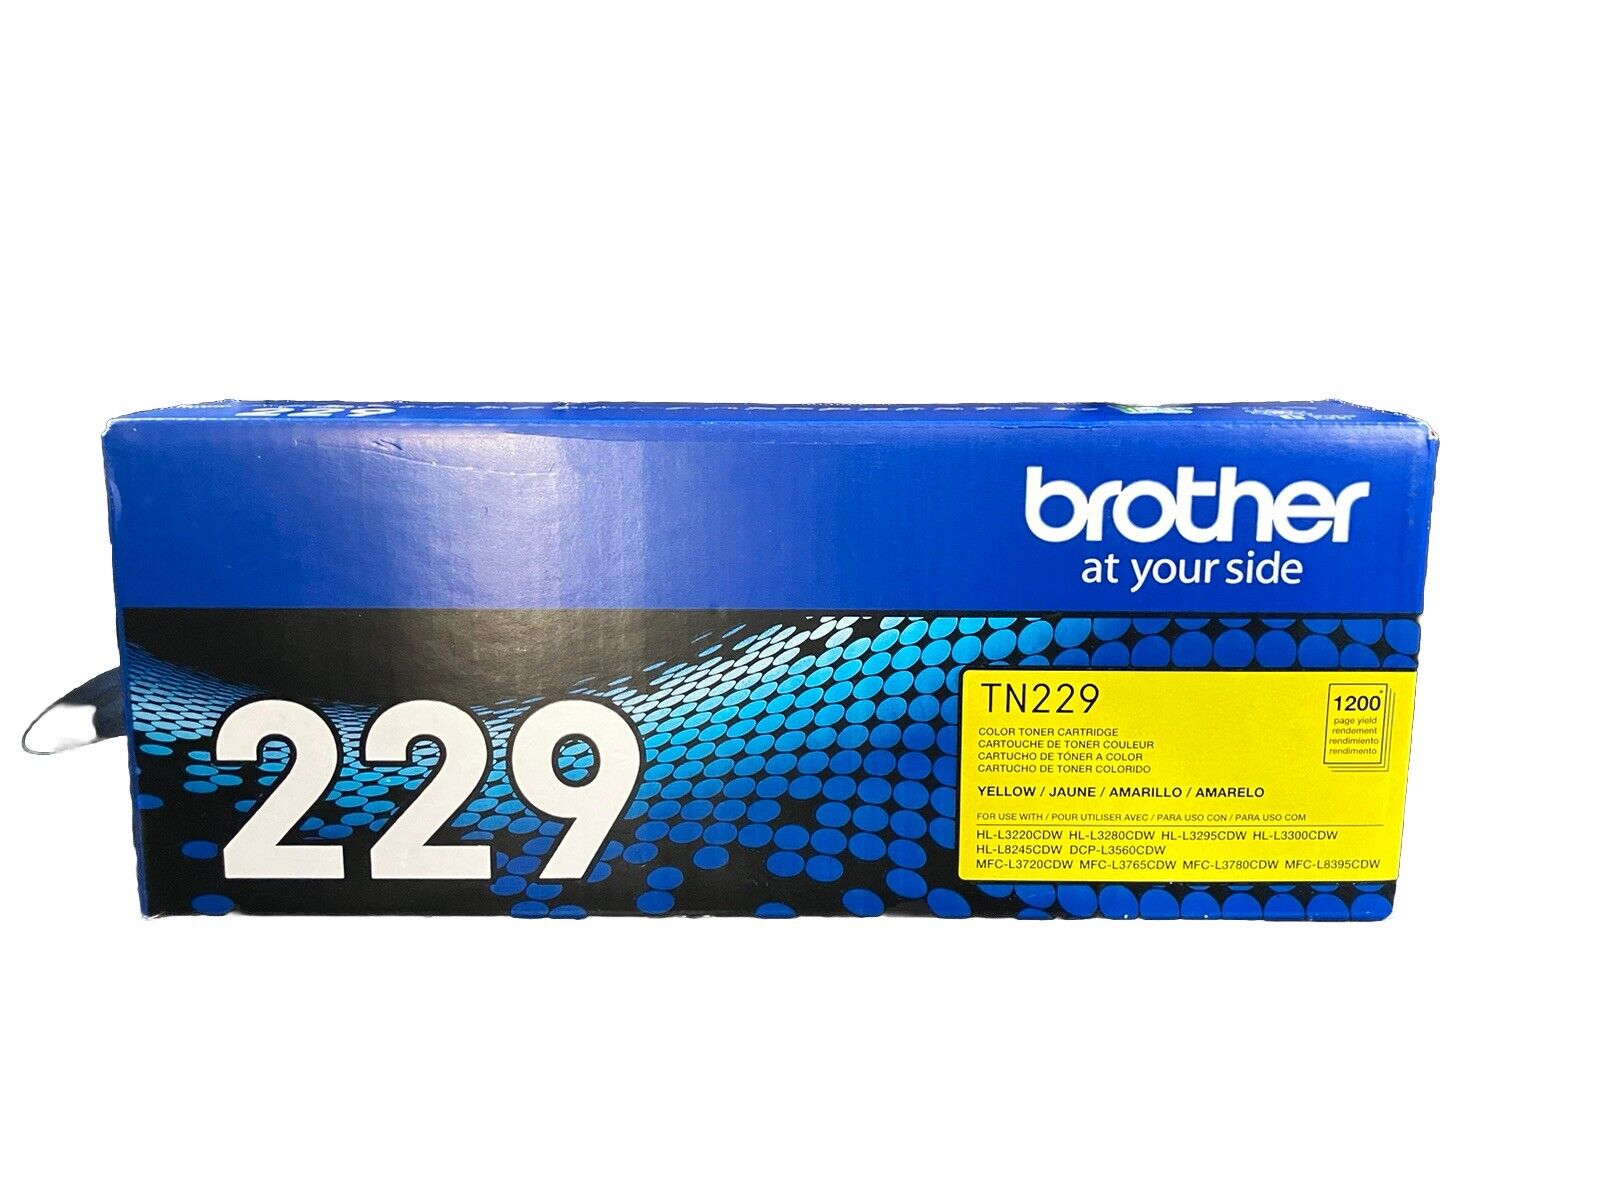 Brother TN229  Toner Cartridge - Yellow (New In Sealed Box)